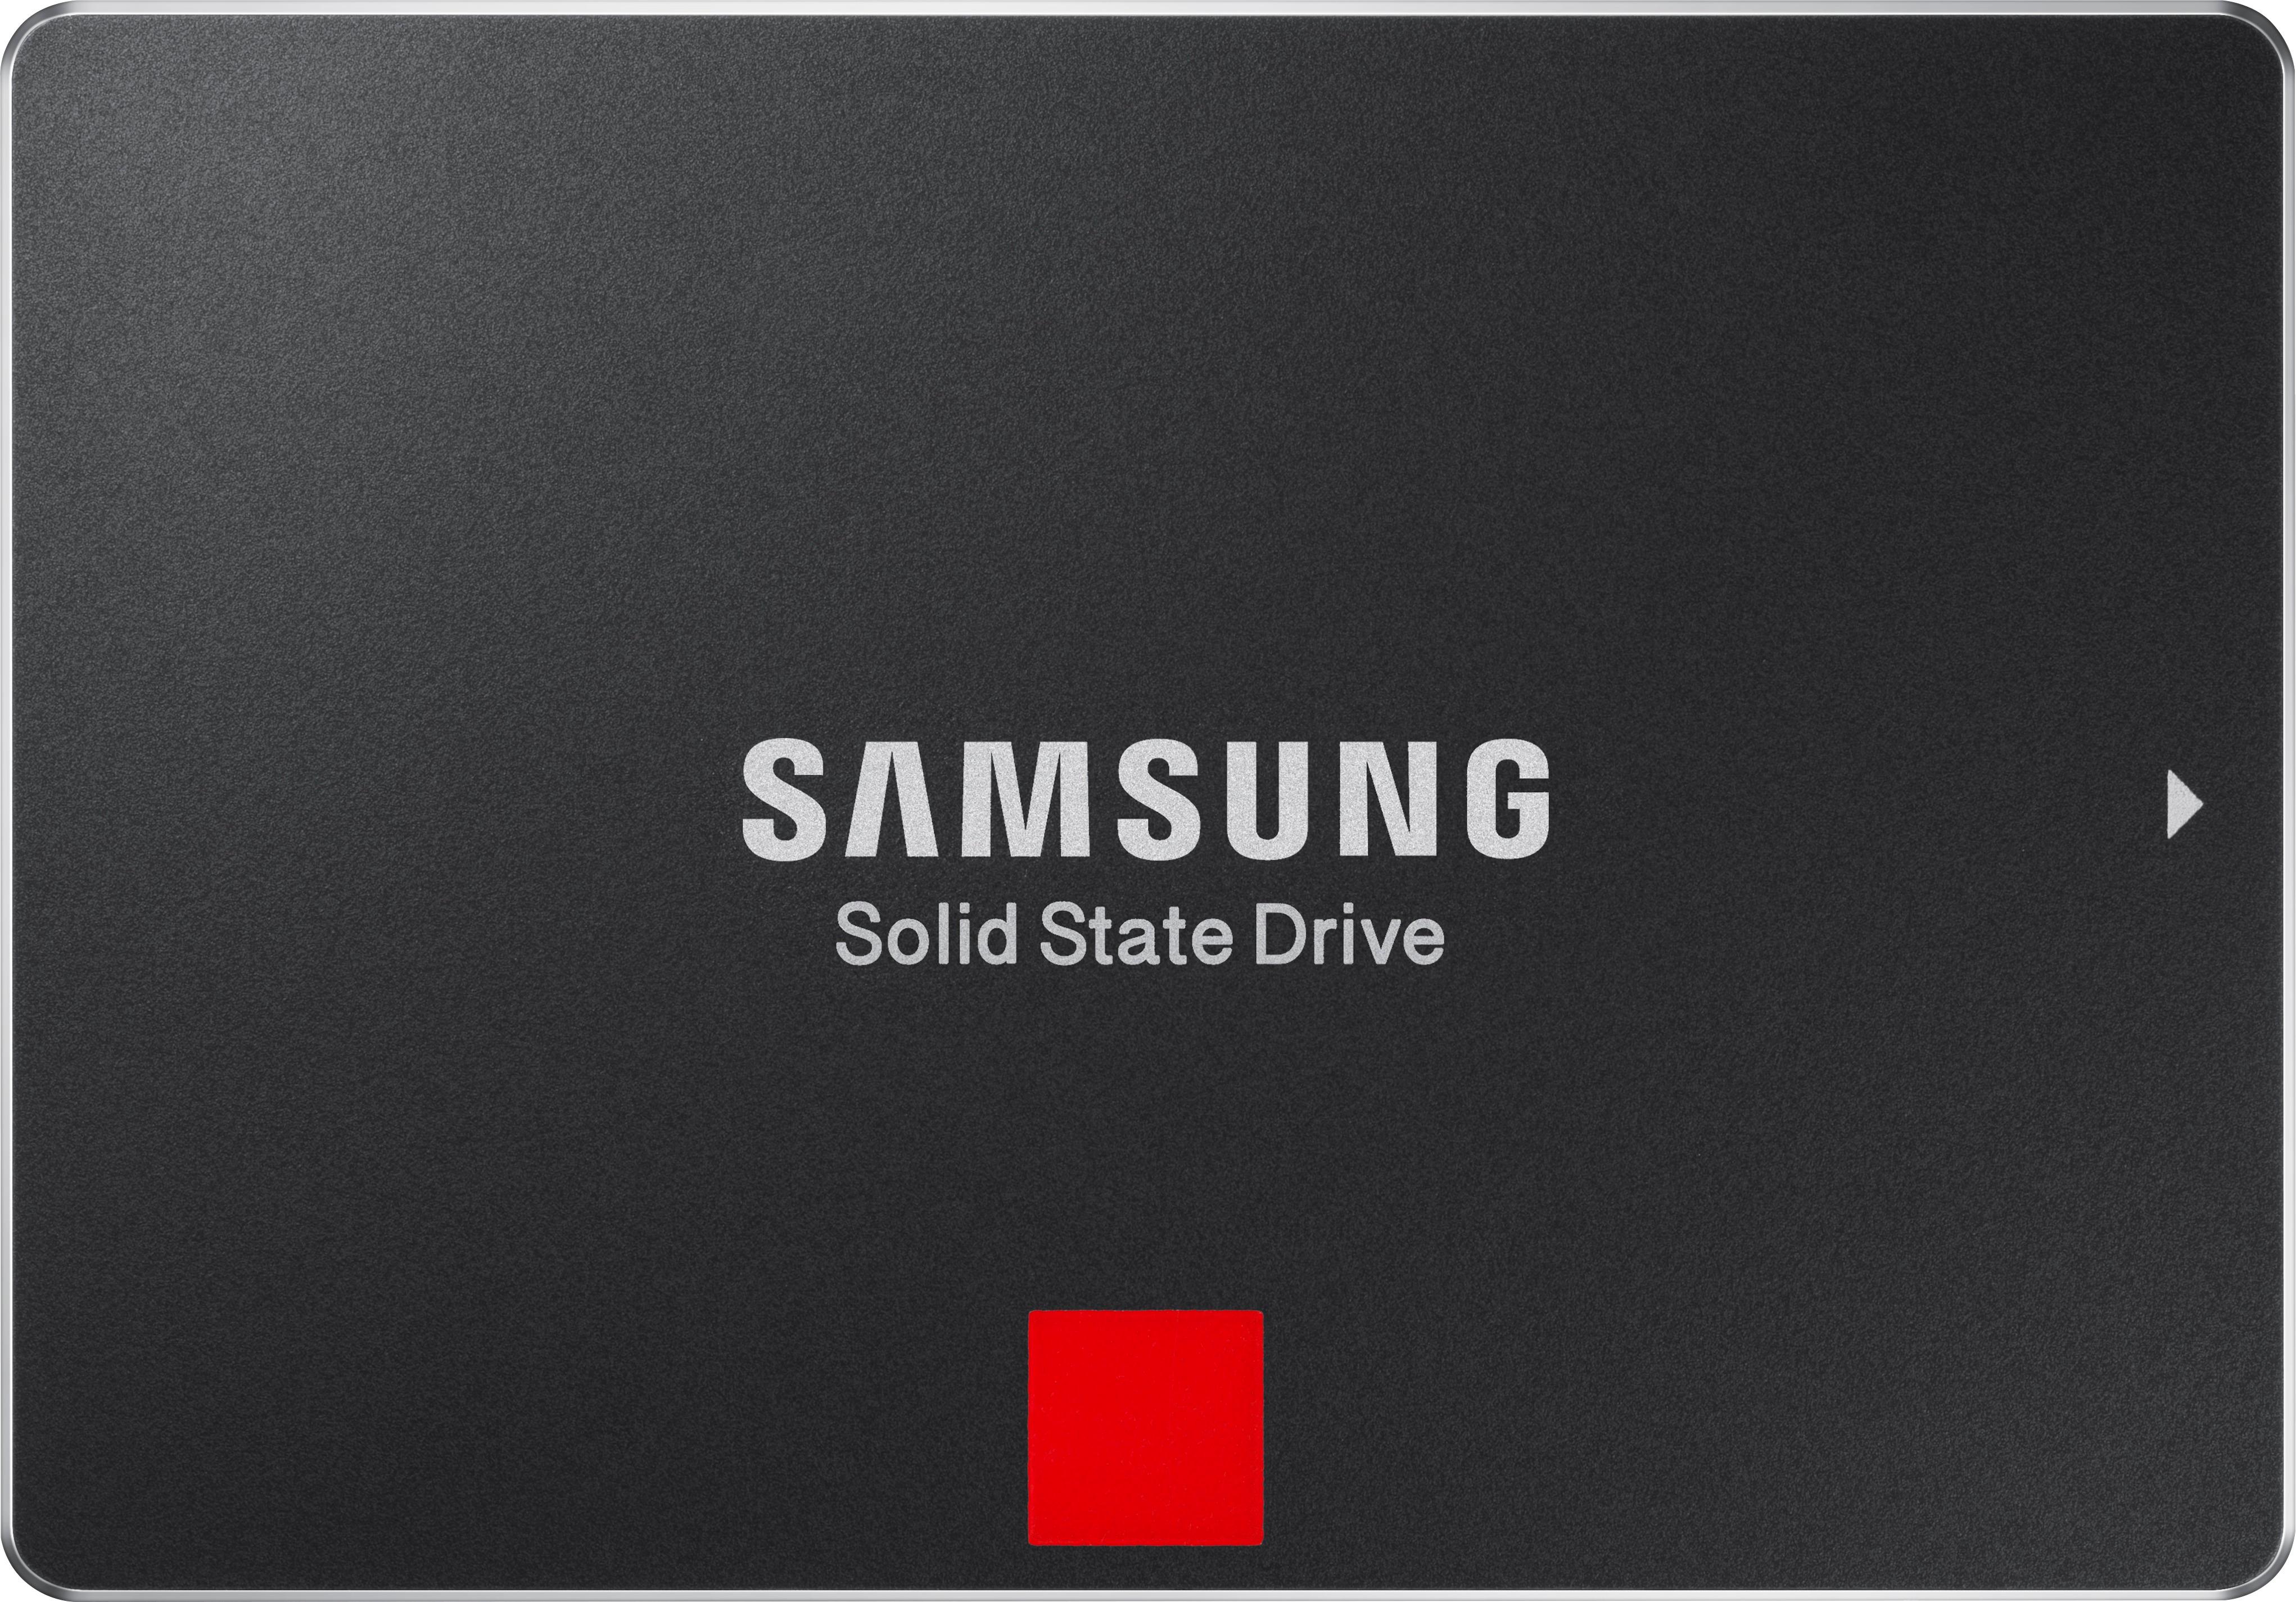 Samsung - 860 PRO 256GB Internal SATA Solid State Drive